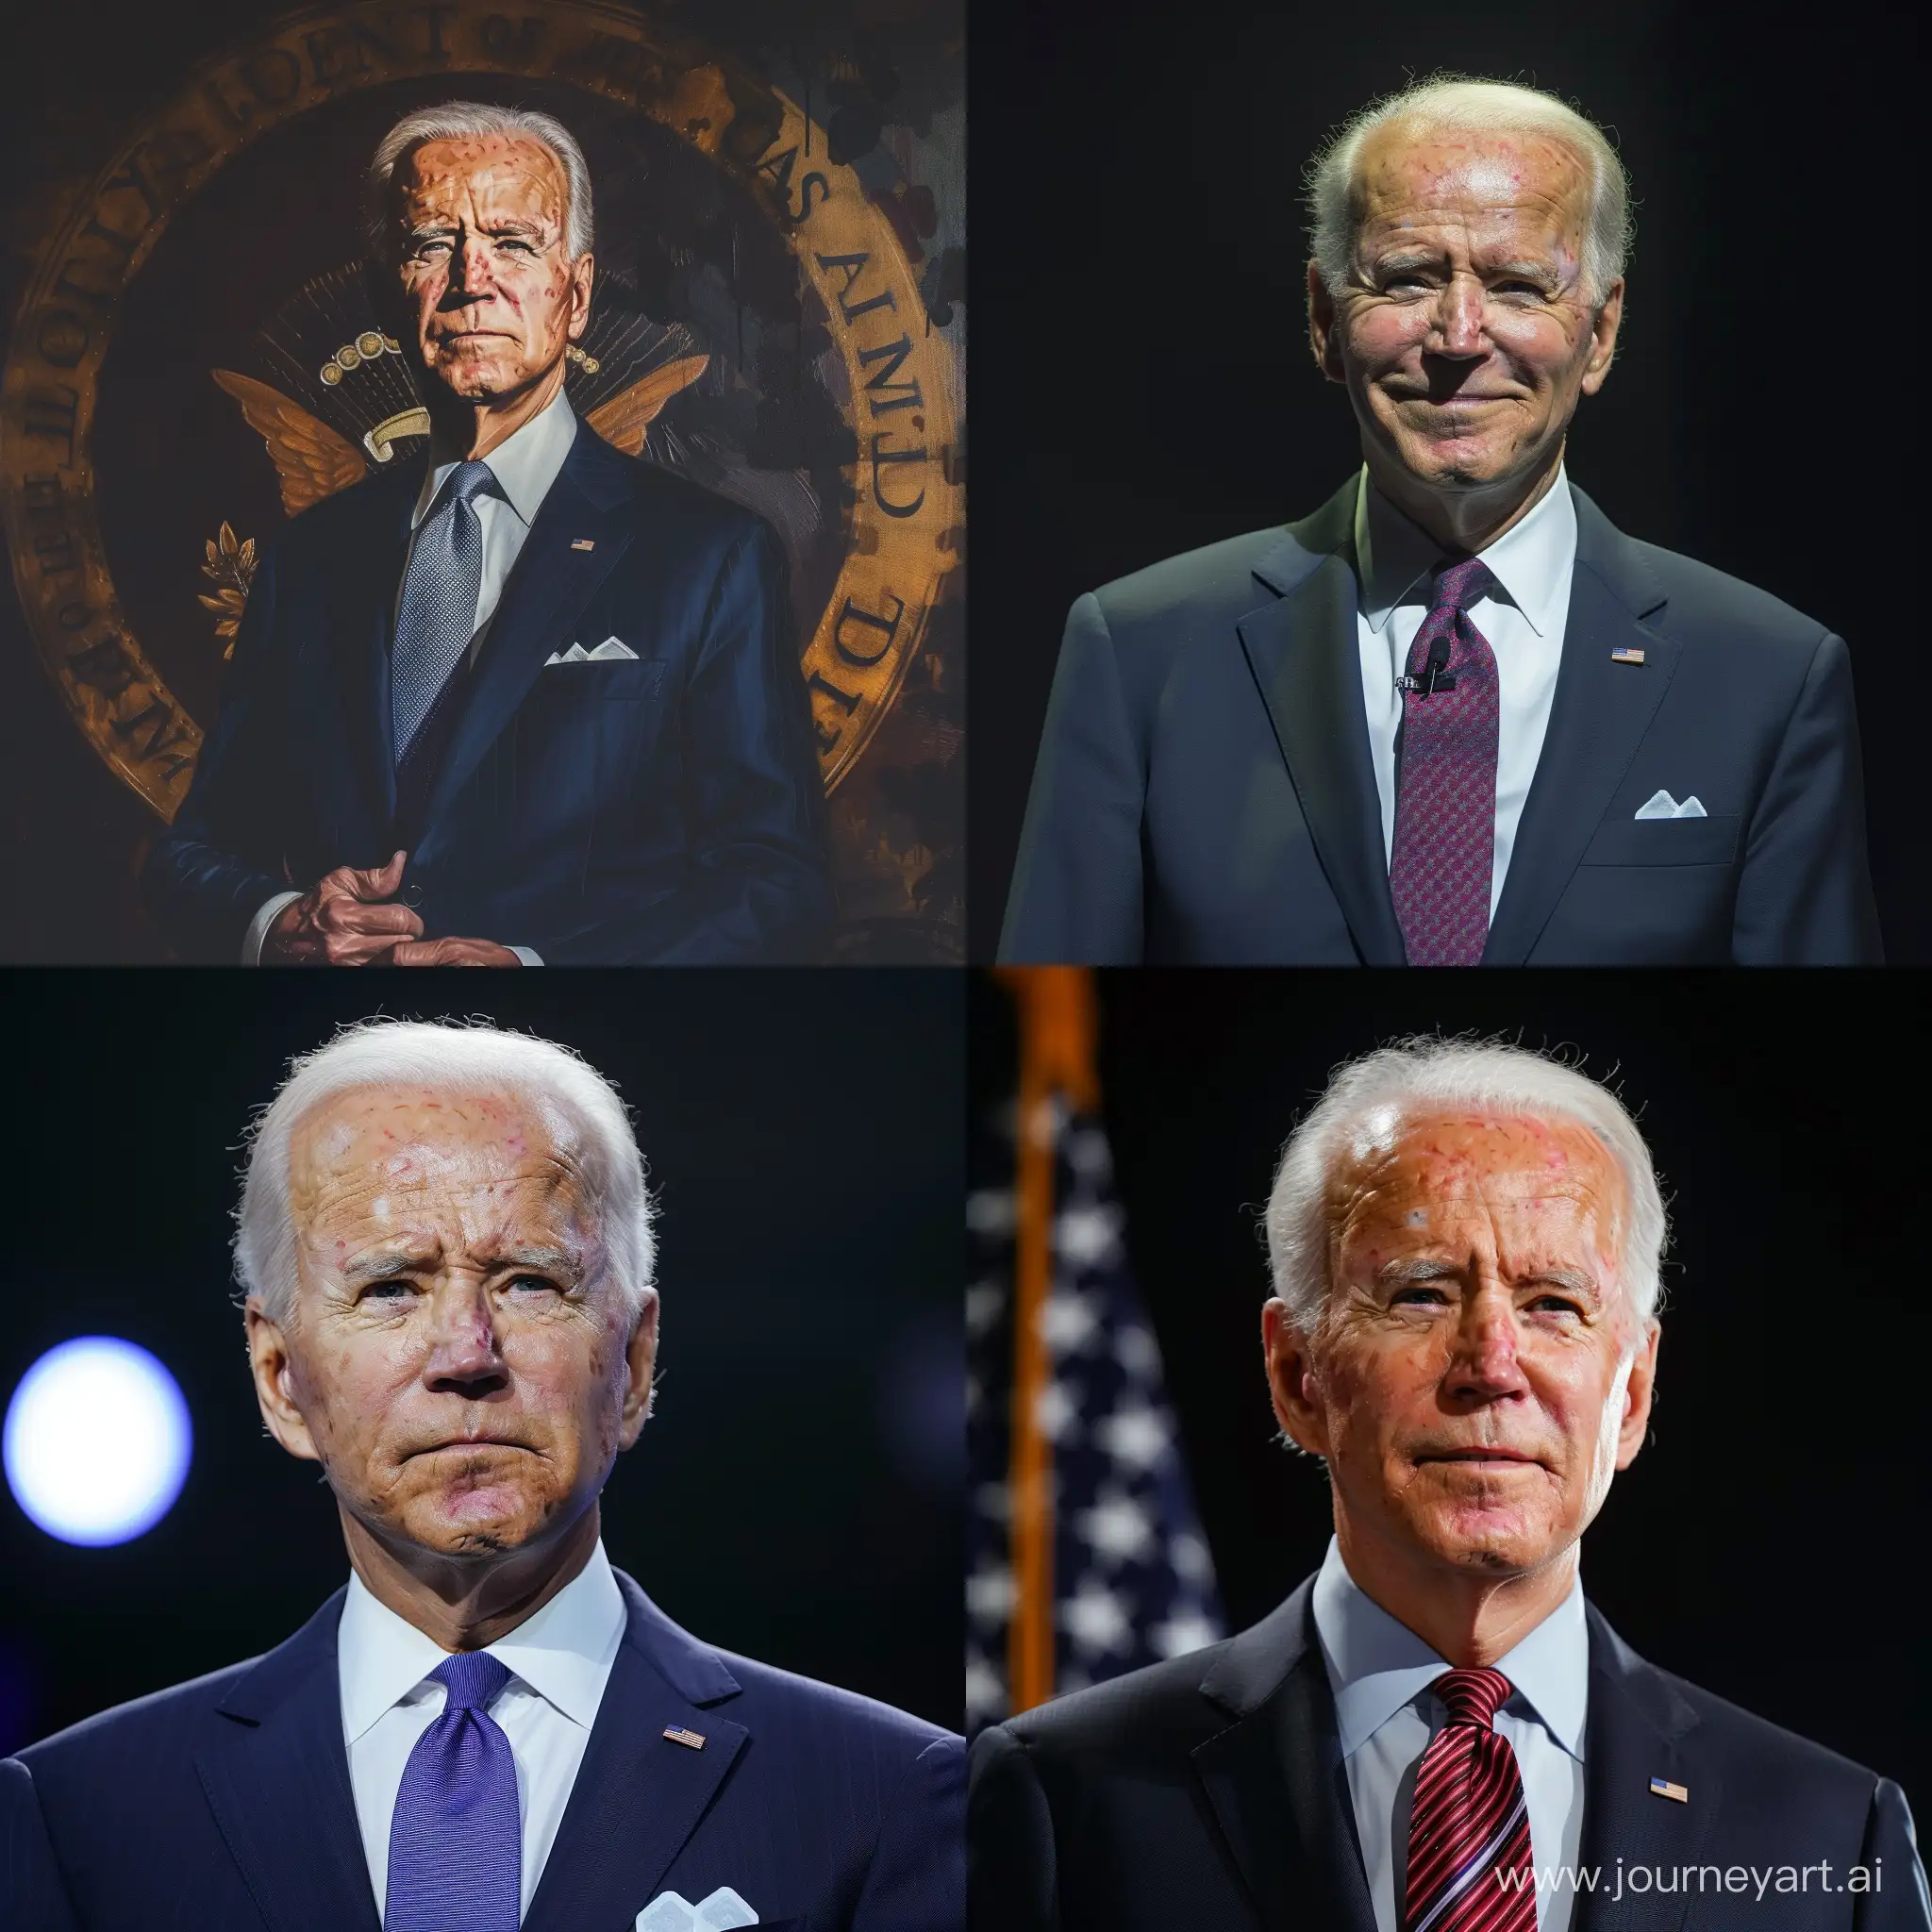 Joe-Biden-Portrait-in-Vibrant-Colors